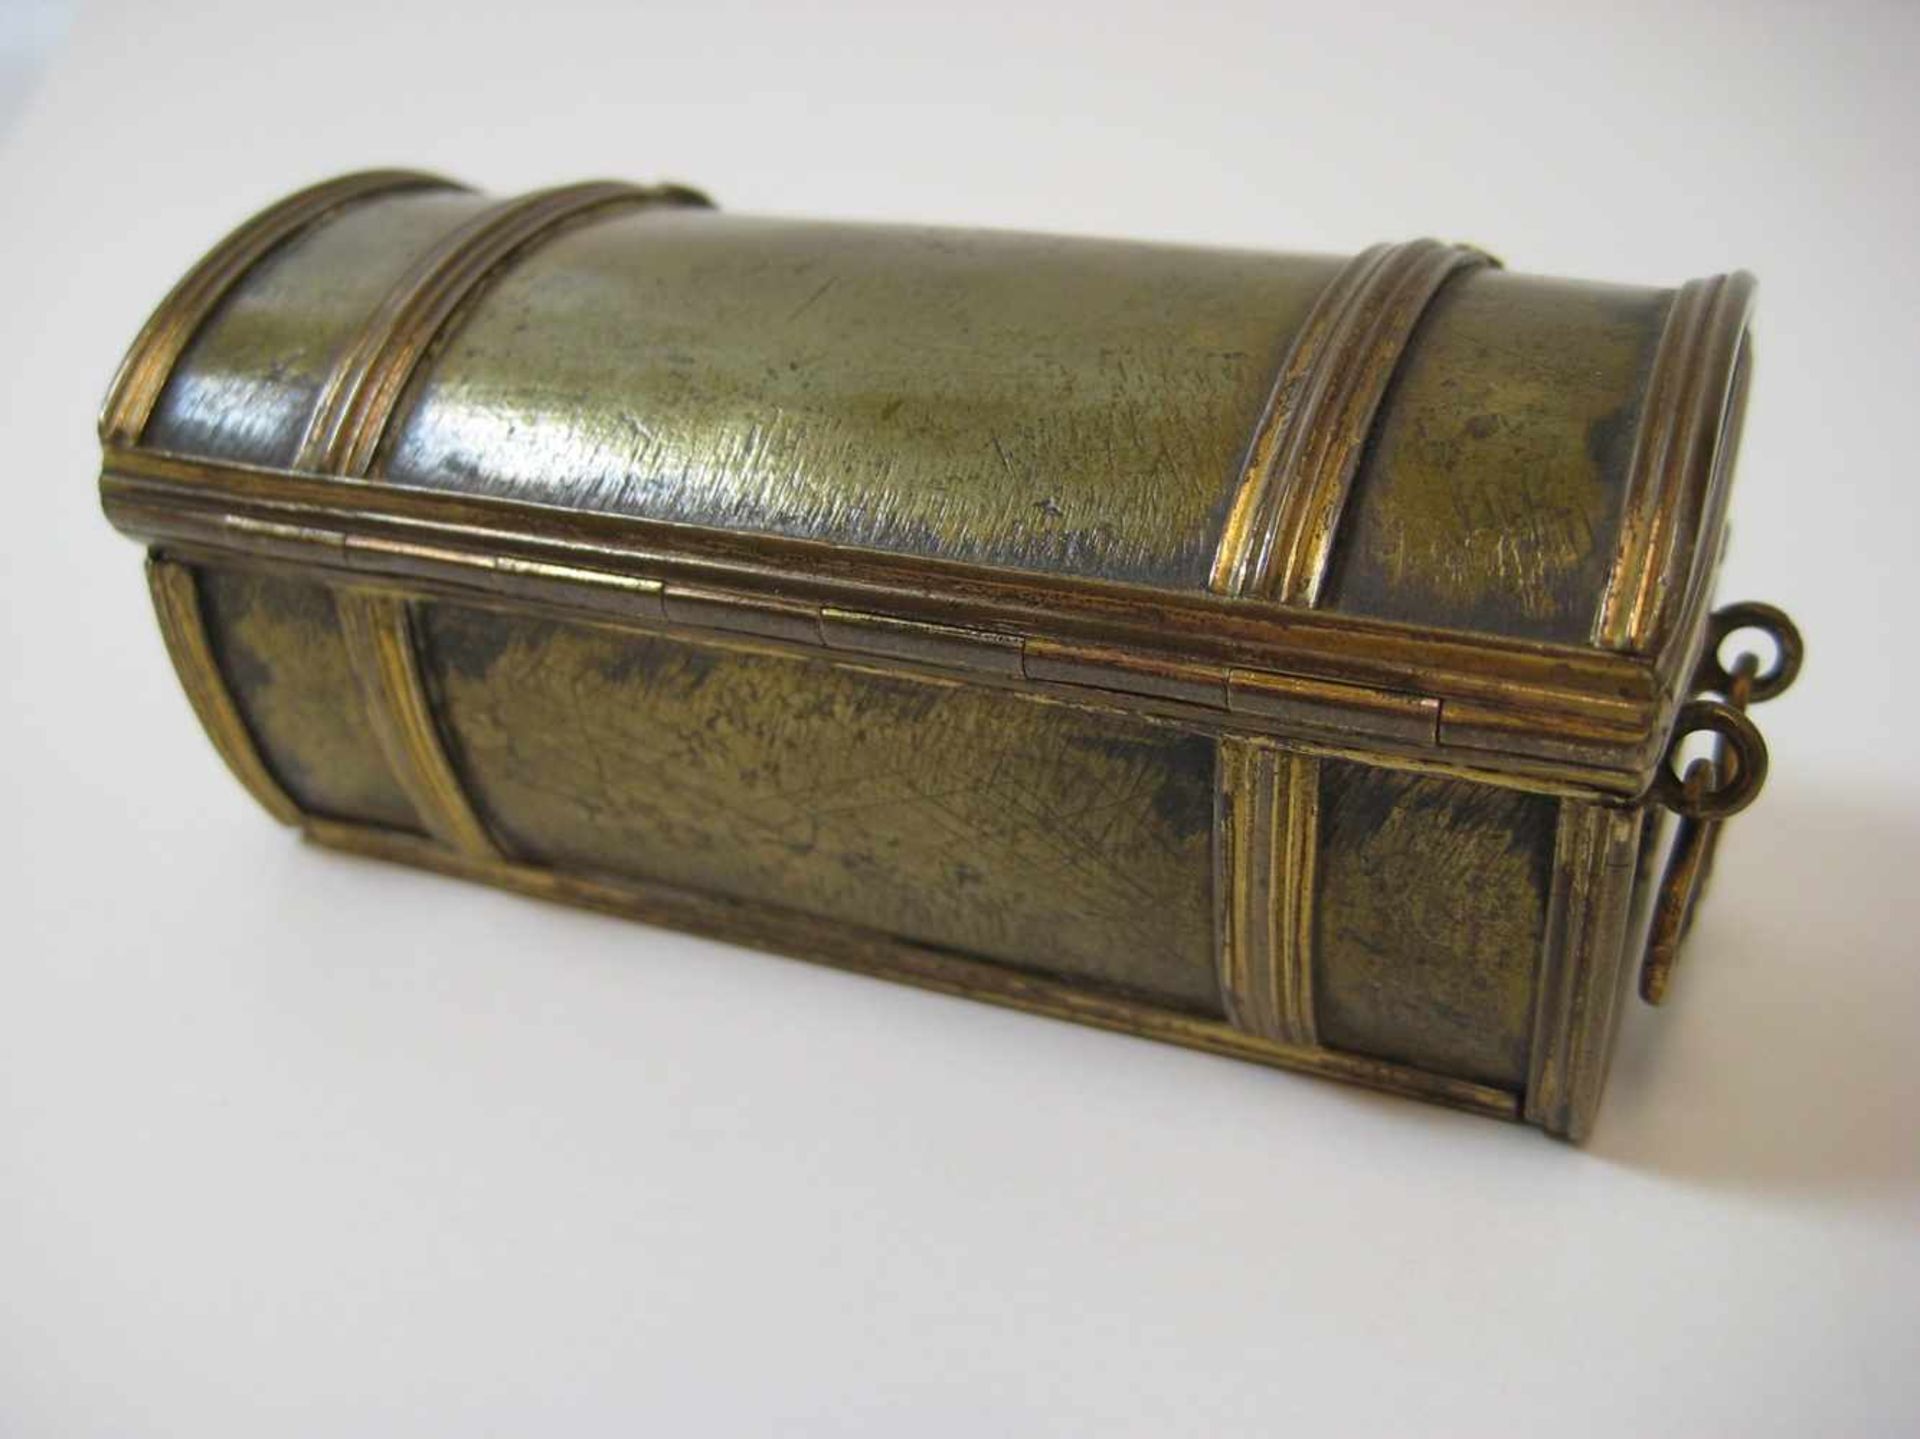 Miniatur-Truhe, 18. Jahrhundert, Metall mit Feuervergoldung, 3,3 x 8 x 4 cm.- - -19.00 % buyer's - Image 3 of 3